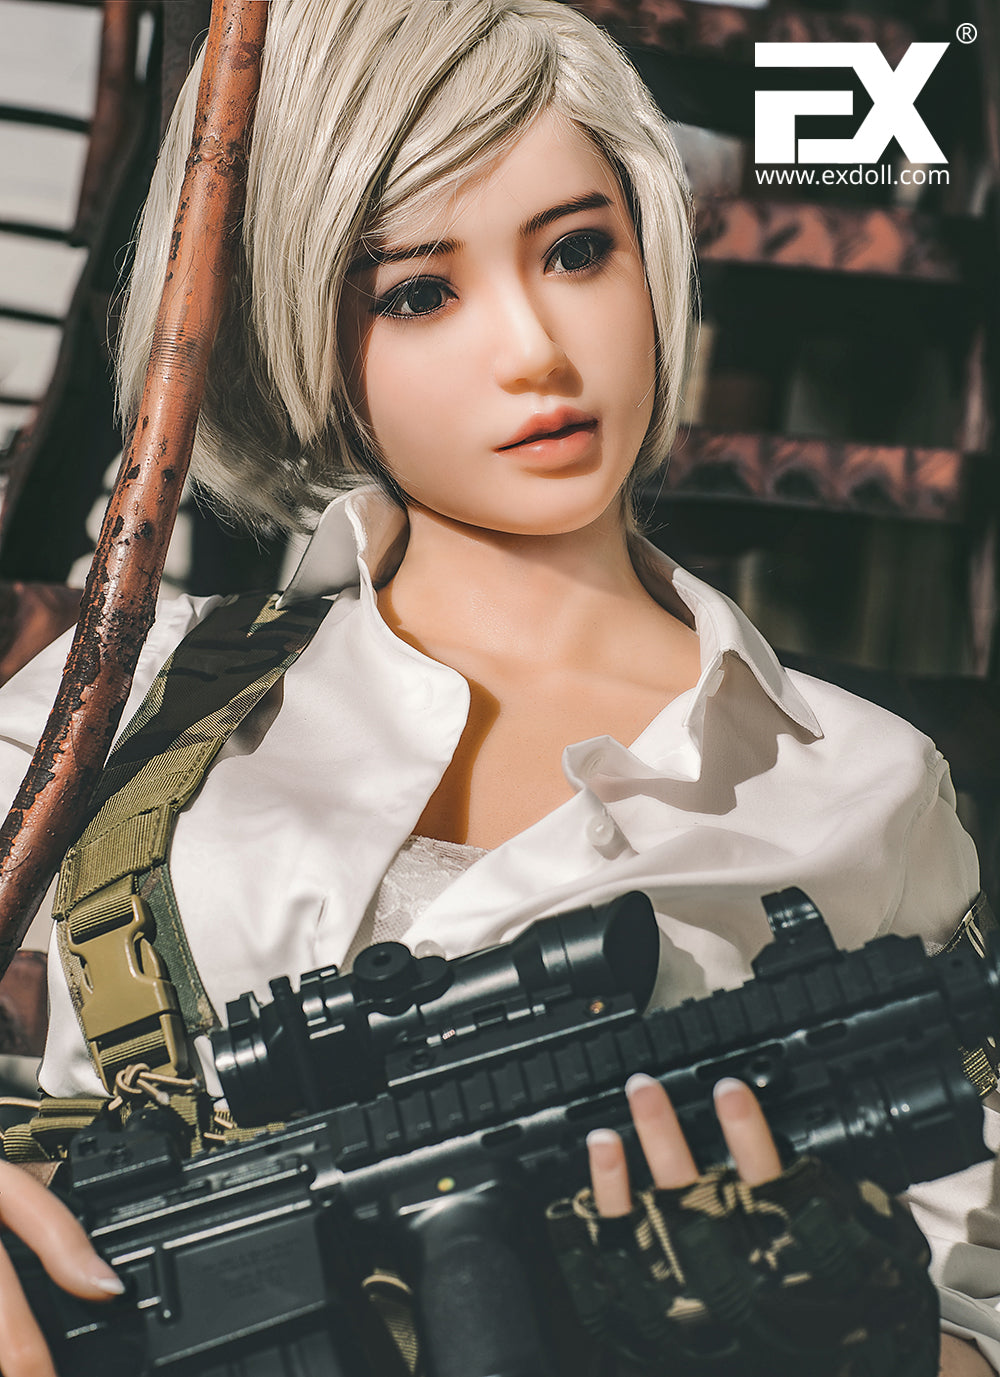 EX Doll Ukiyoe Series 170 cm Silicone - Mu Yan | Buy Sex Dolls at DOLLS ACTUALLY